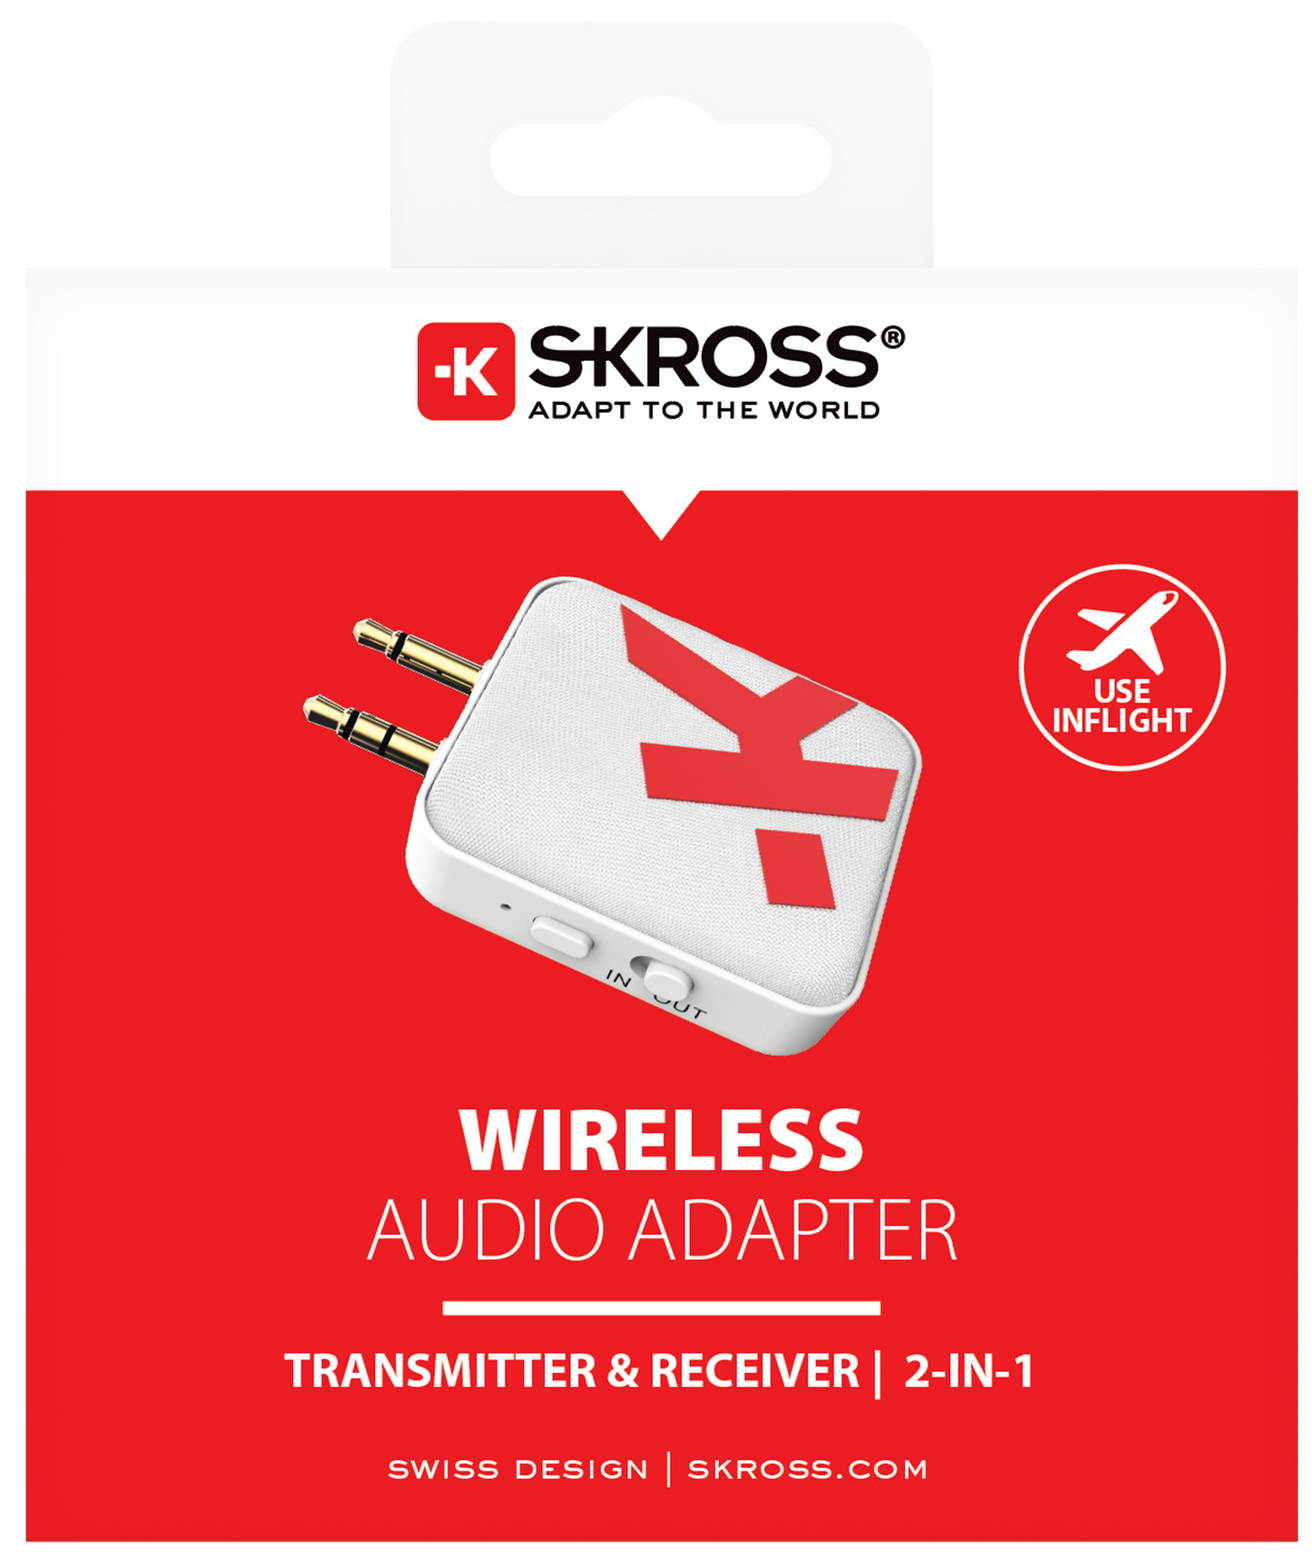 Skross Wireless Audio Adapter SKR-0243 Packaging